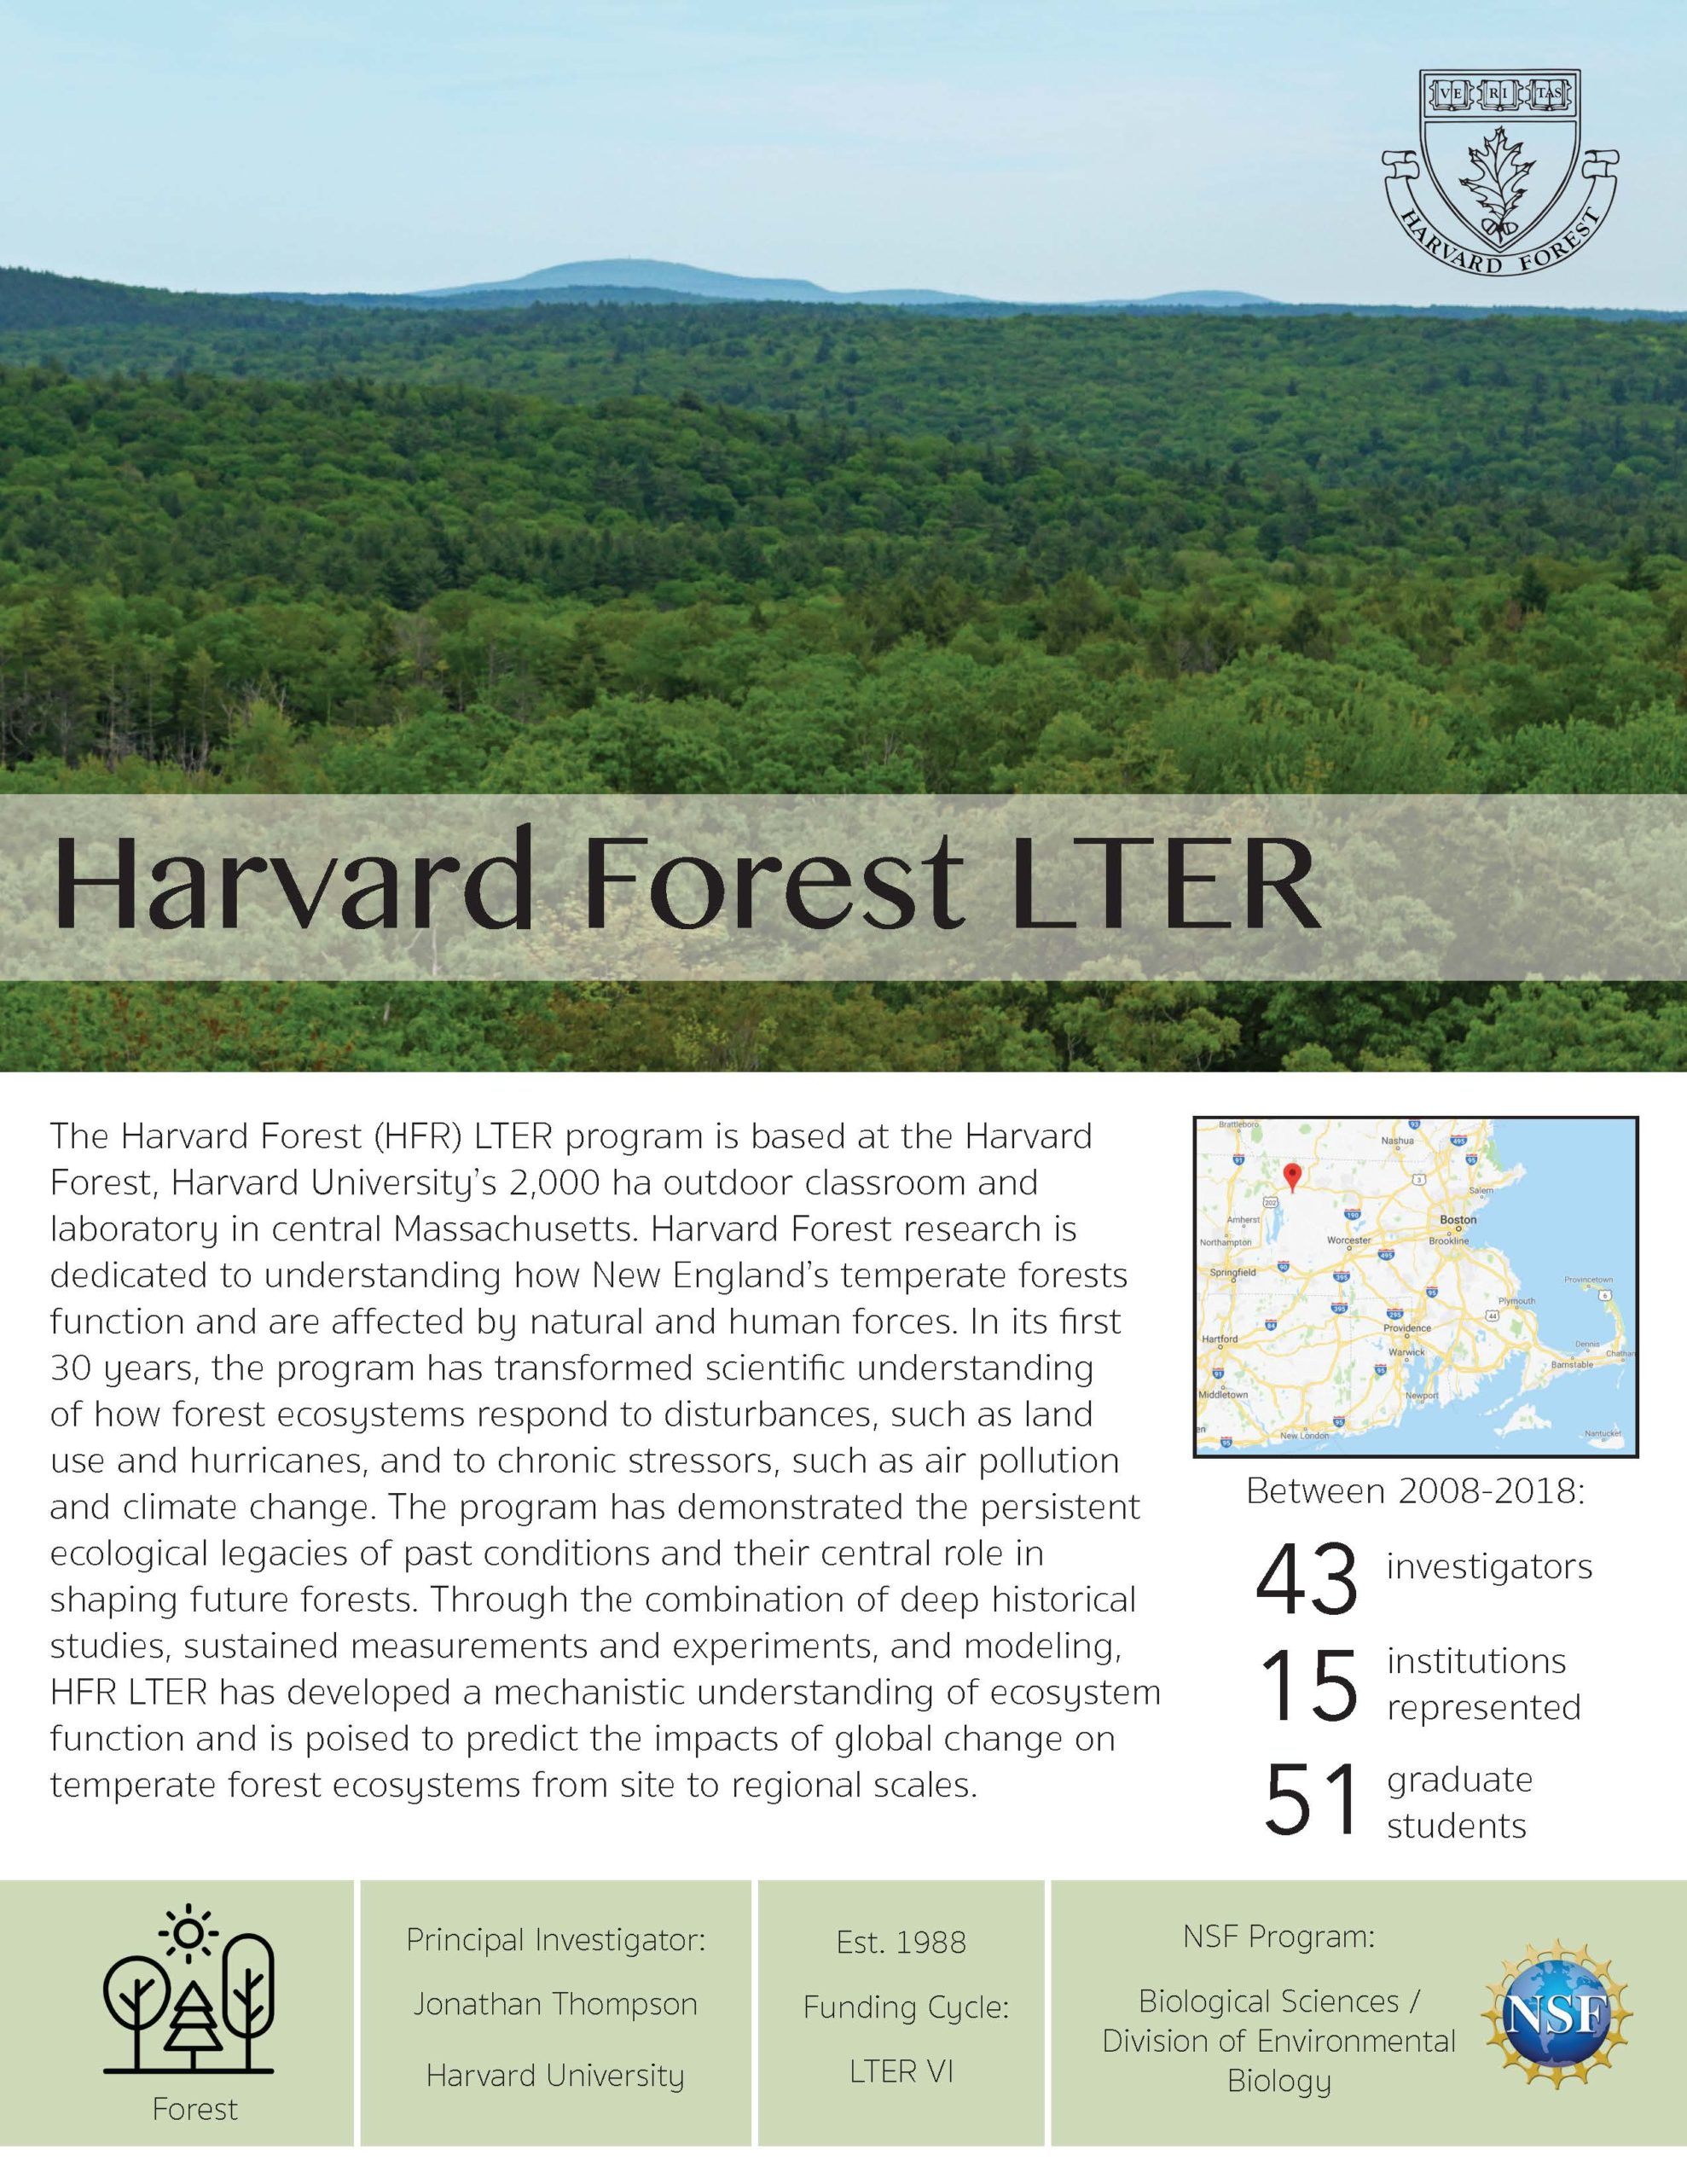 Harvard Forest LTER site brief 2019